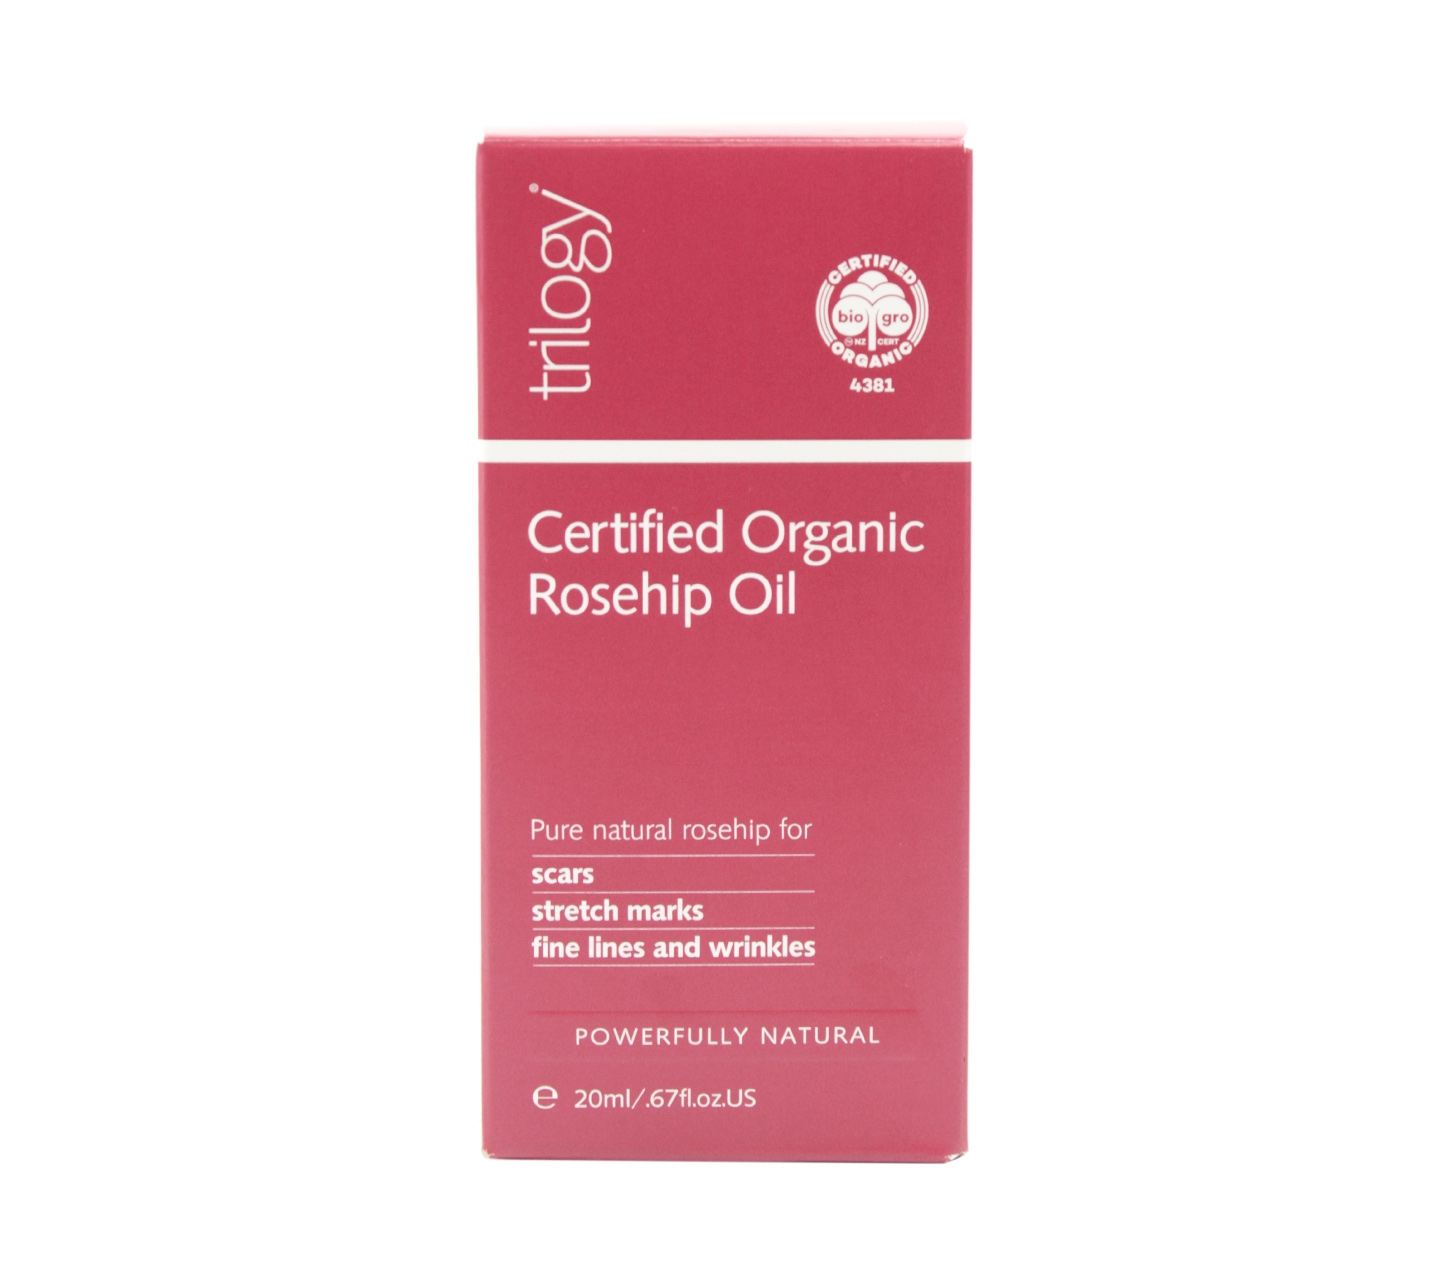 Trilogy Certified Organic Roseship Oil Skin Care